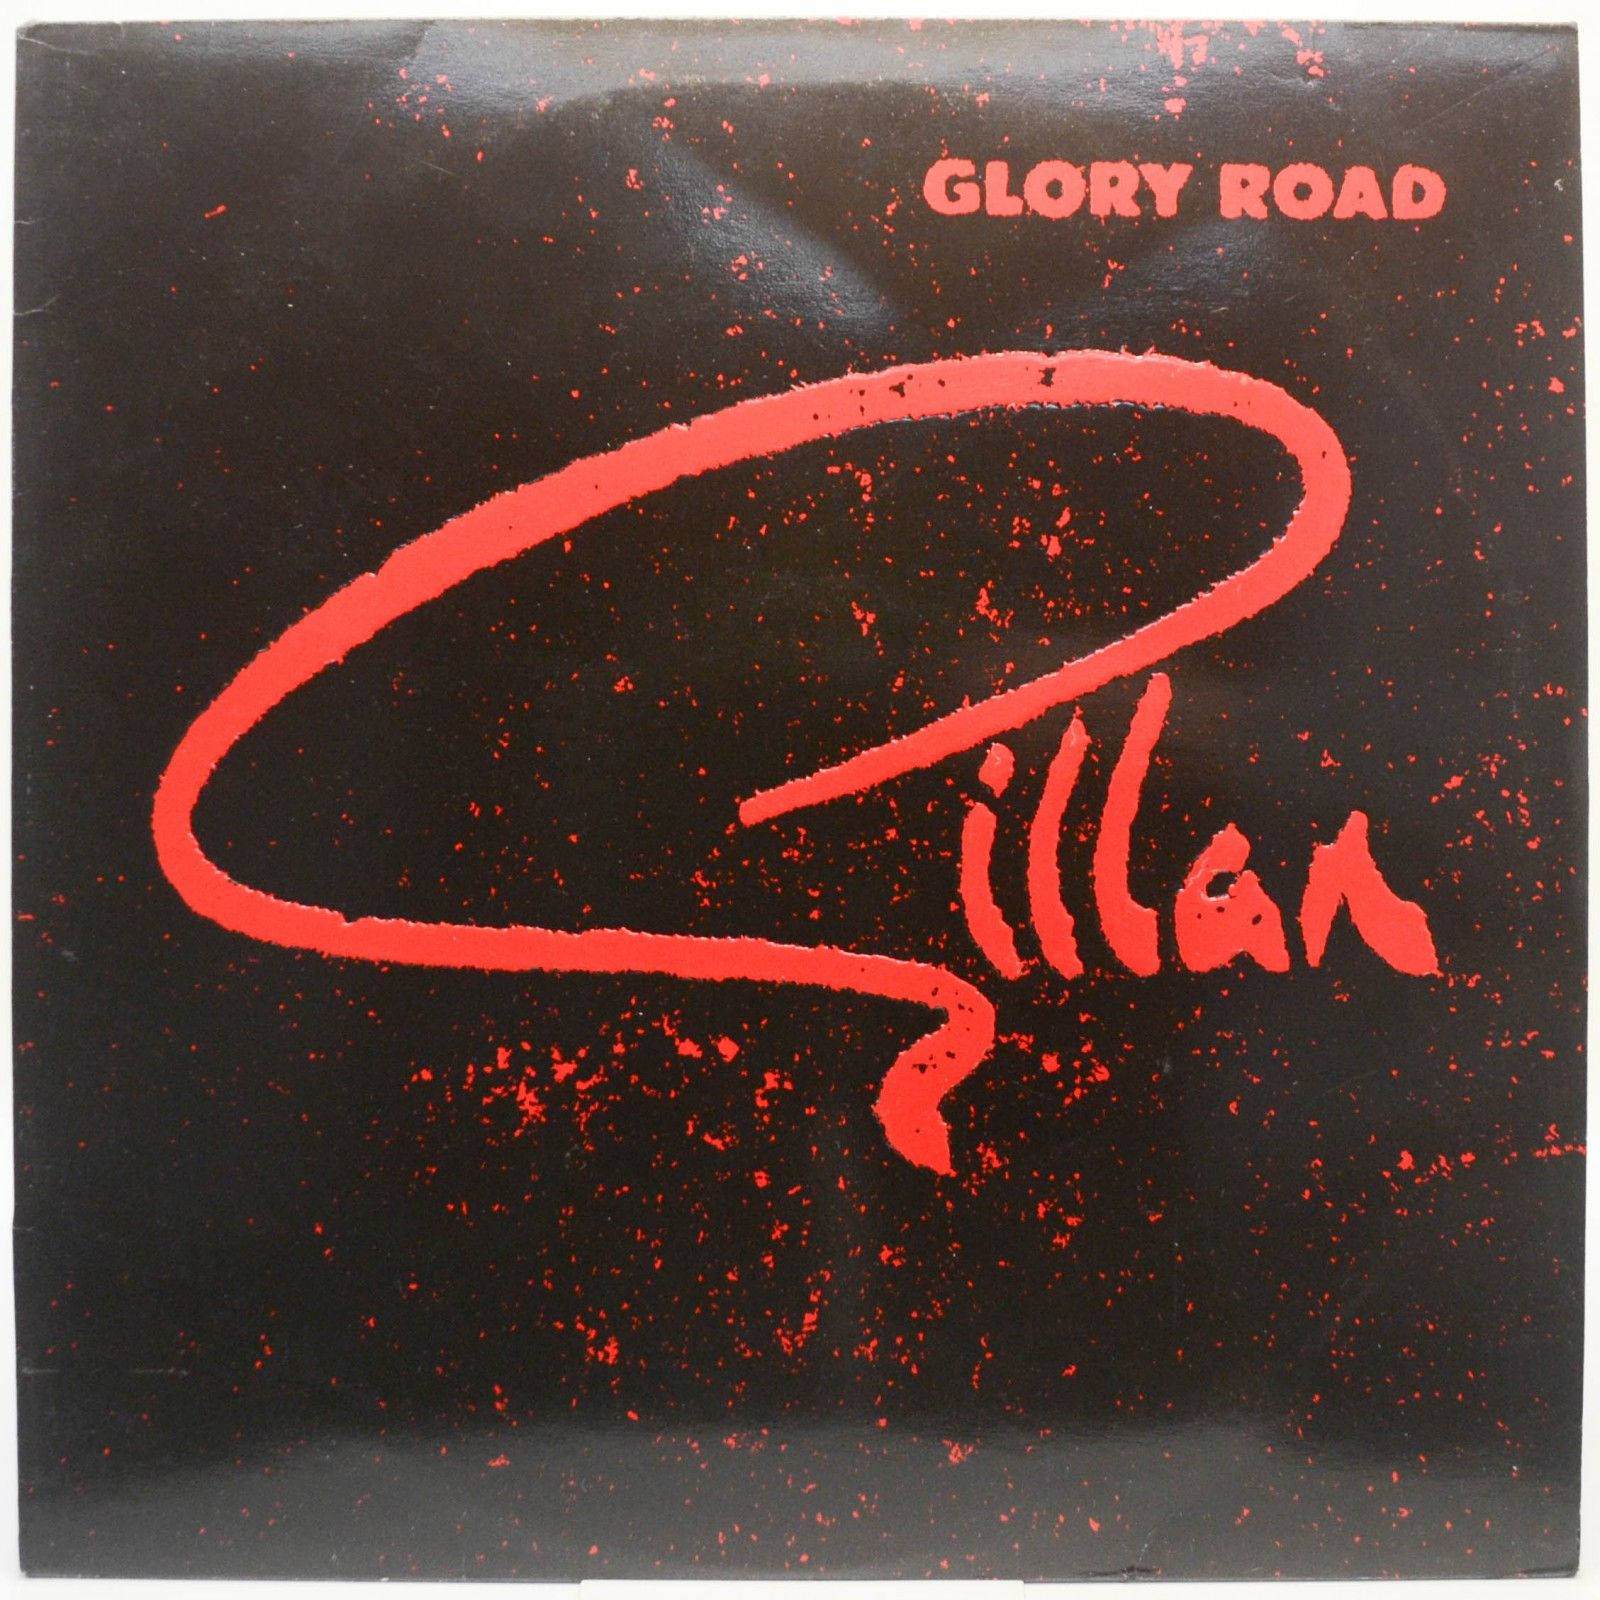 Gillan — Glory Road (1-st, UK), 1980